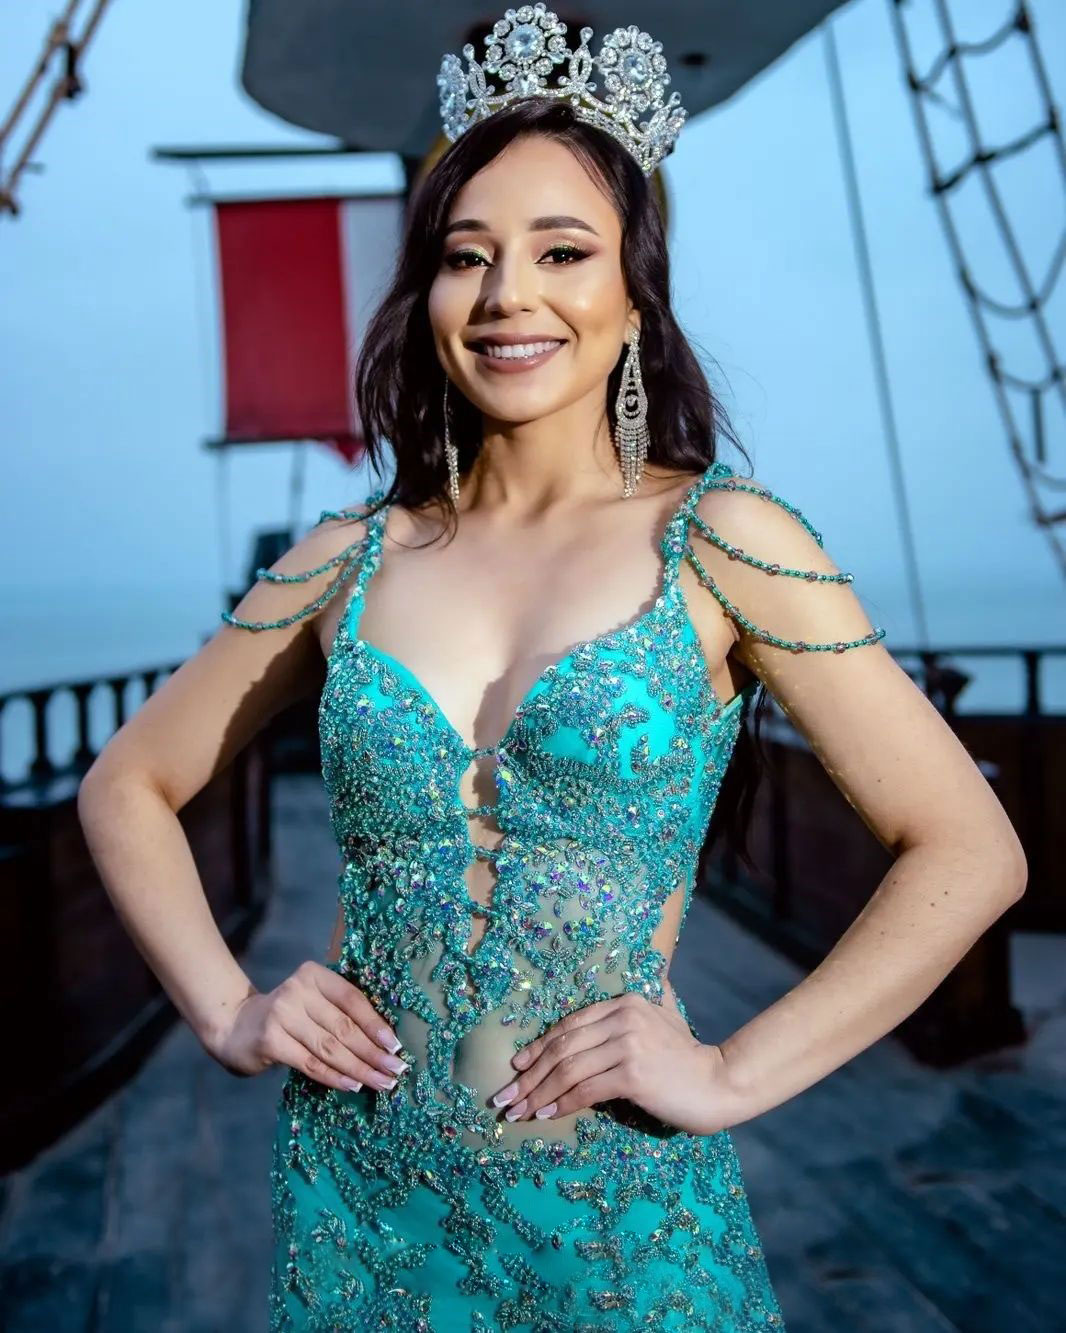 Maricielo Limaco Luque is Miss Peru Lima Region 2022. Photo: Maricielo Limaco/Instagram